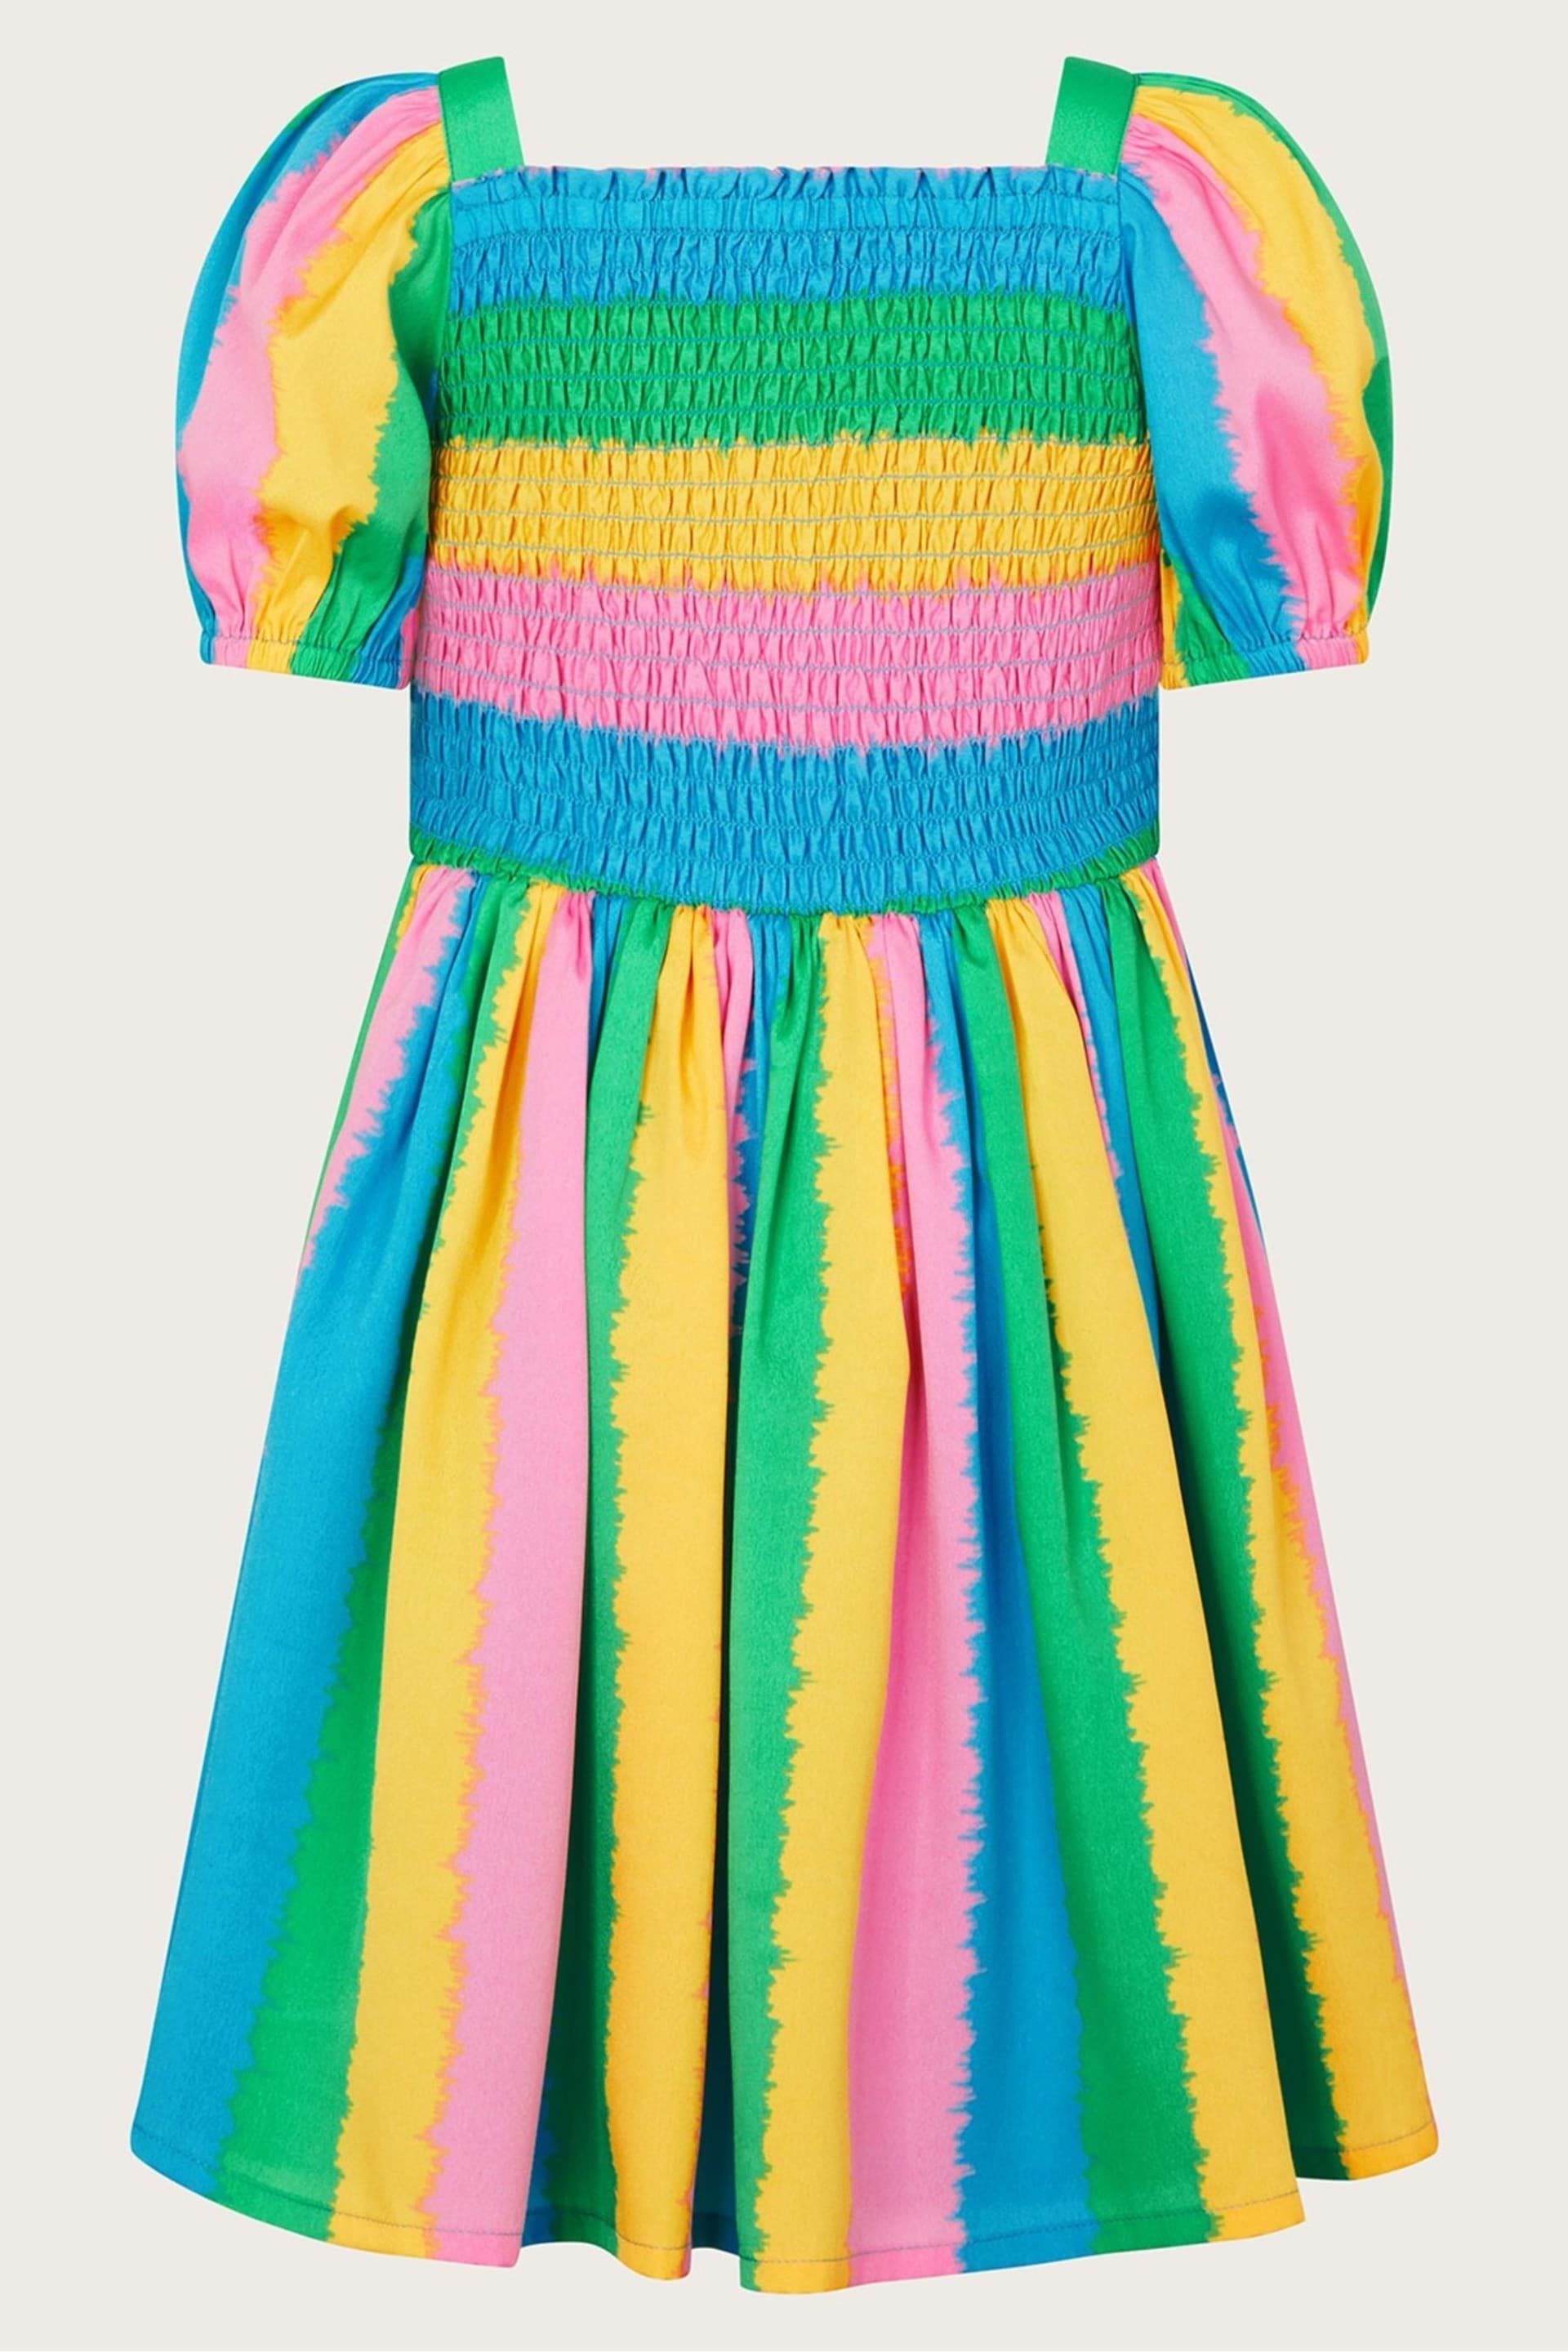 Stripe Pleated Dress - Image 2 of 3